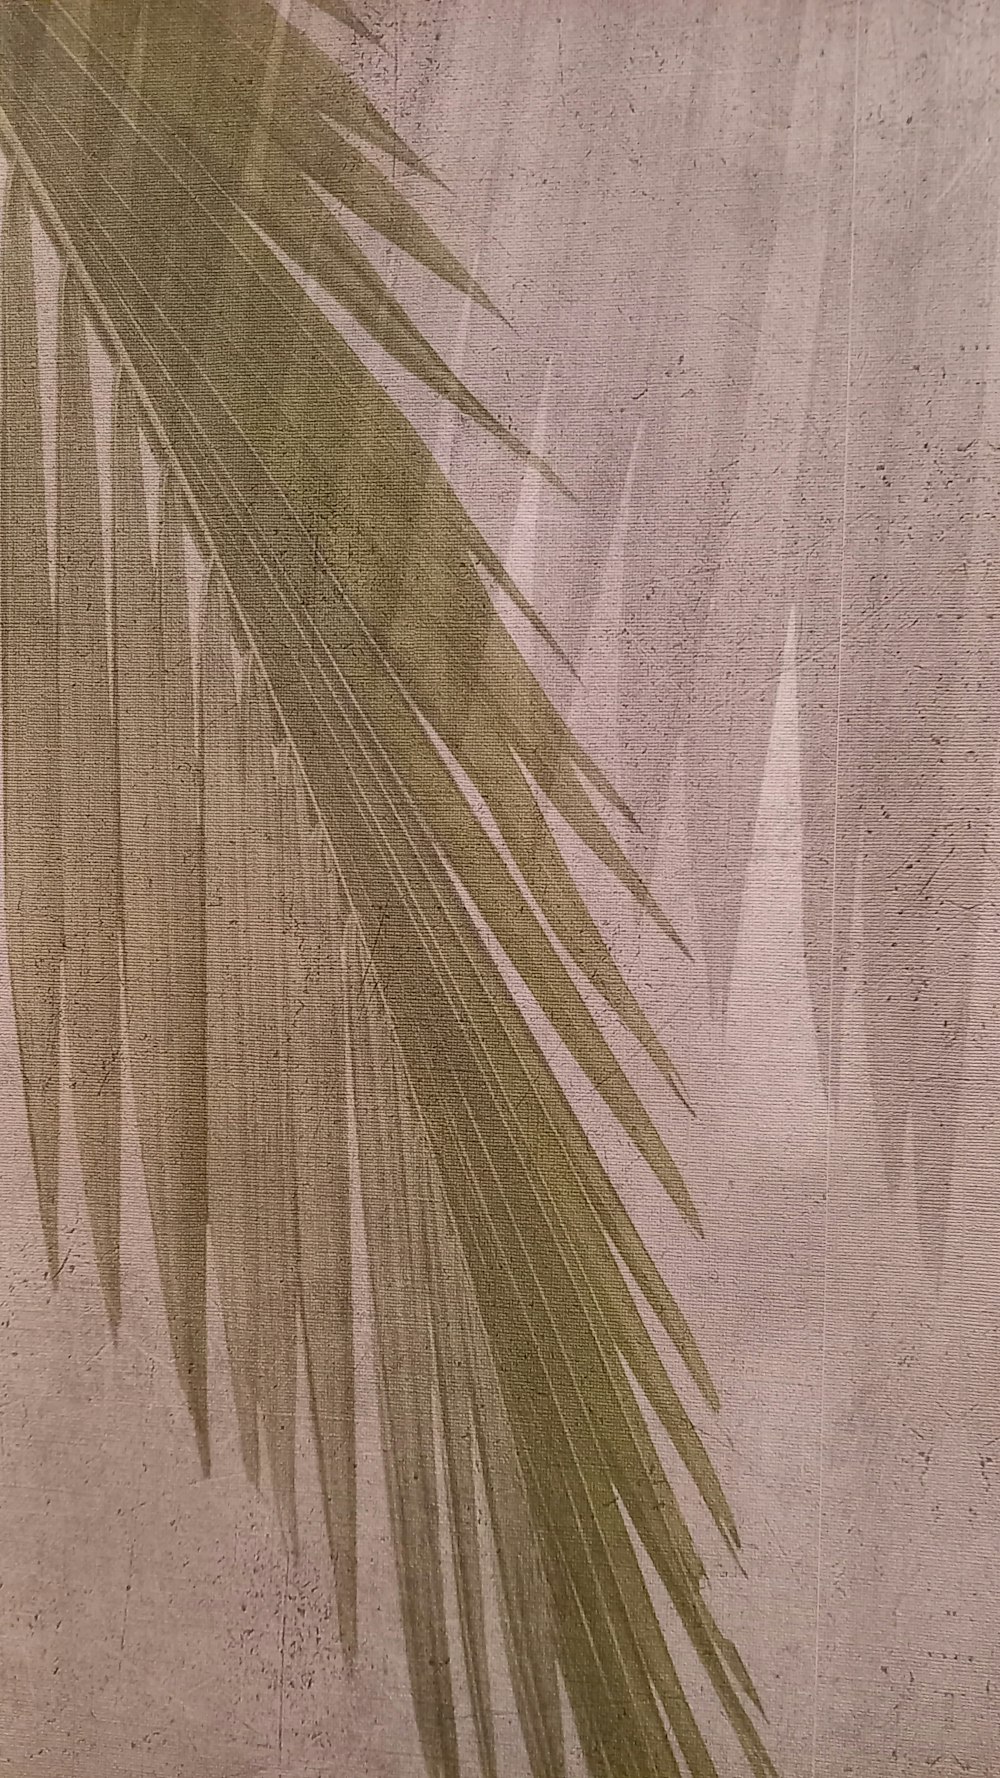 a close up of a palm leaf on a wall